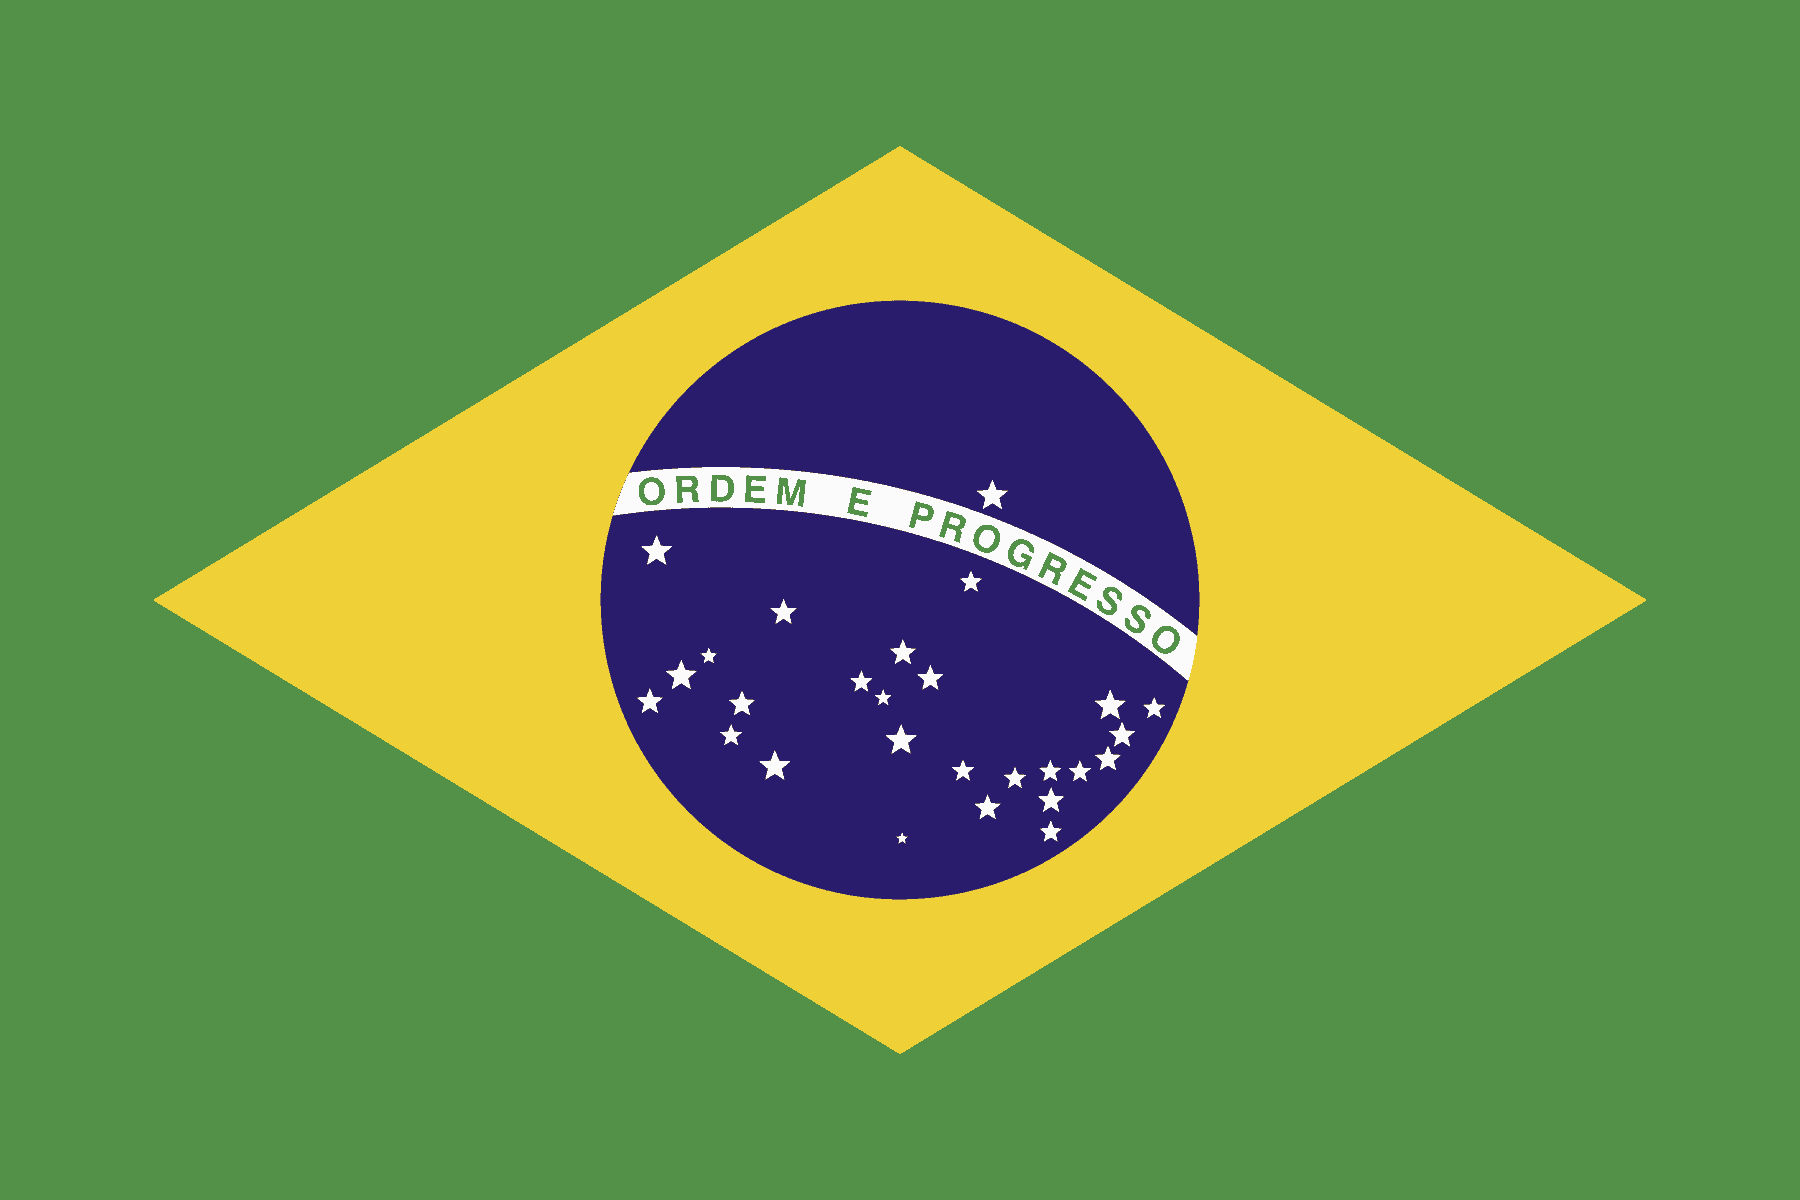 Drone Laws in Brazil